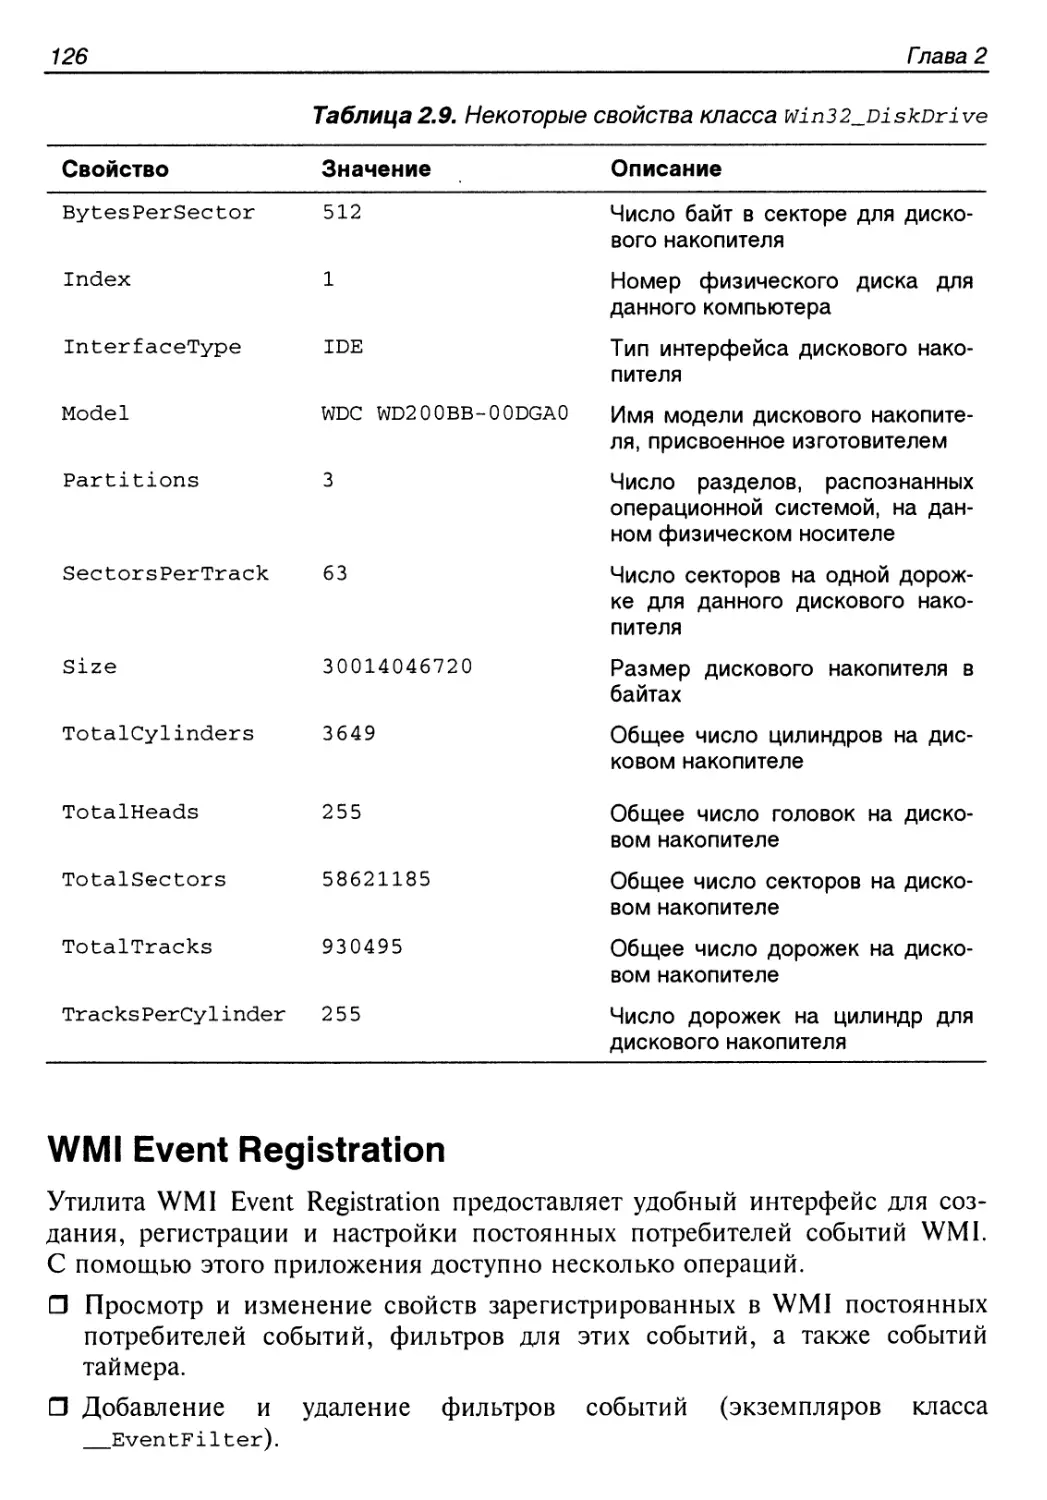 WMI Event Registration